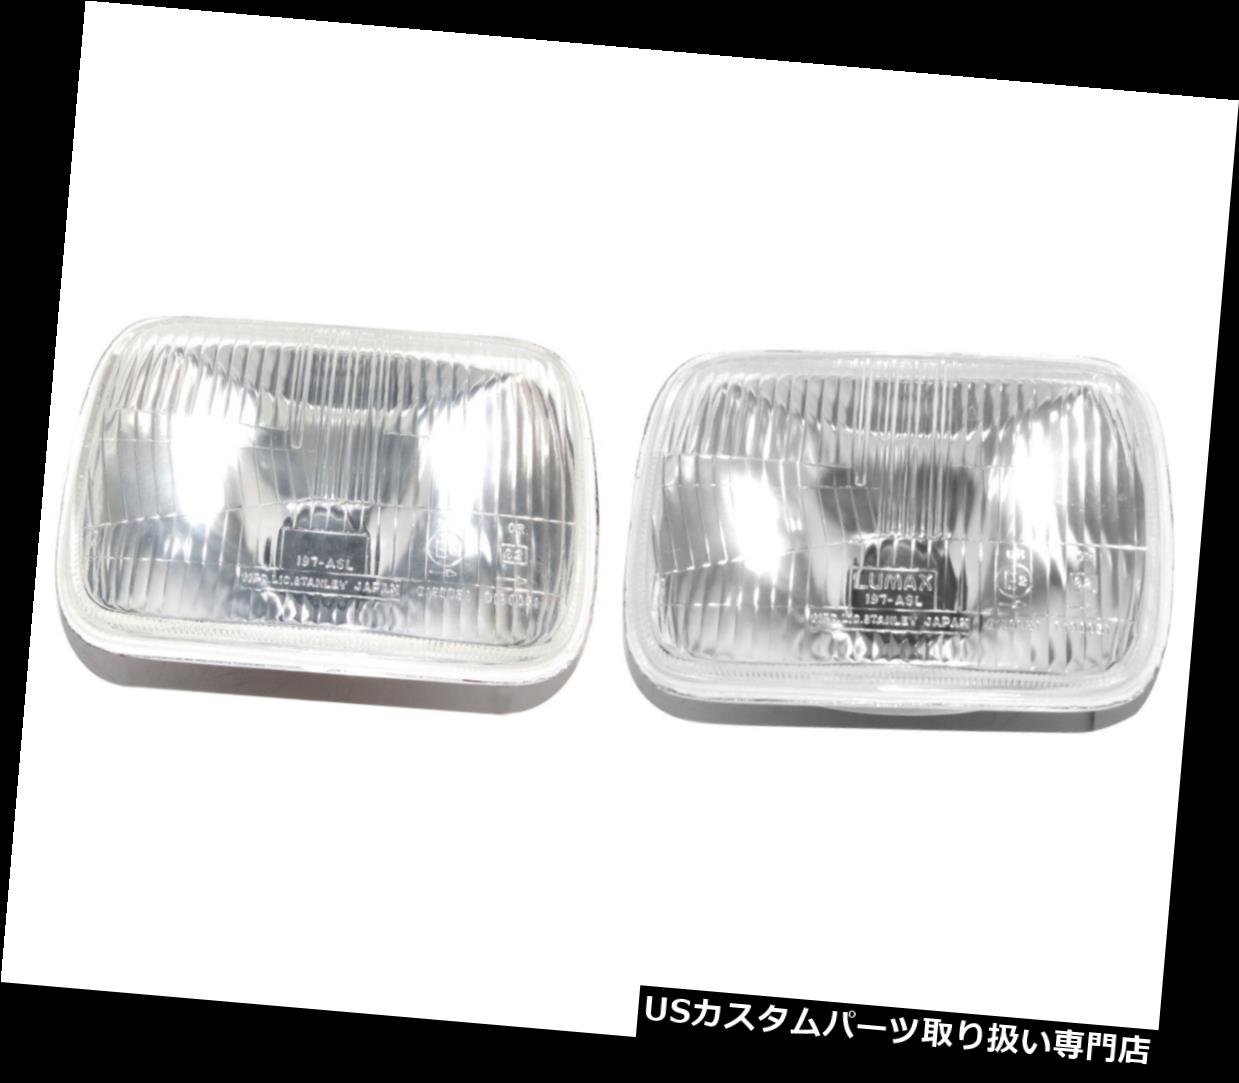 USヘッドライト ダイハツ本田いすゞスバル日産マツダ三菱トヨタGEc用ヘッドライトセット Headlight Set For Daihatsu Honda Isuzu Subaru Nissan Mazda Mitsubishi Toyota GEc ヘッドライト